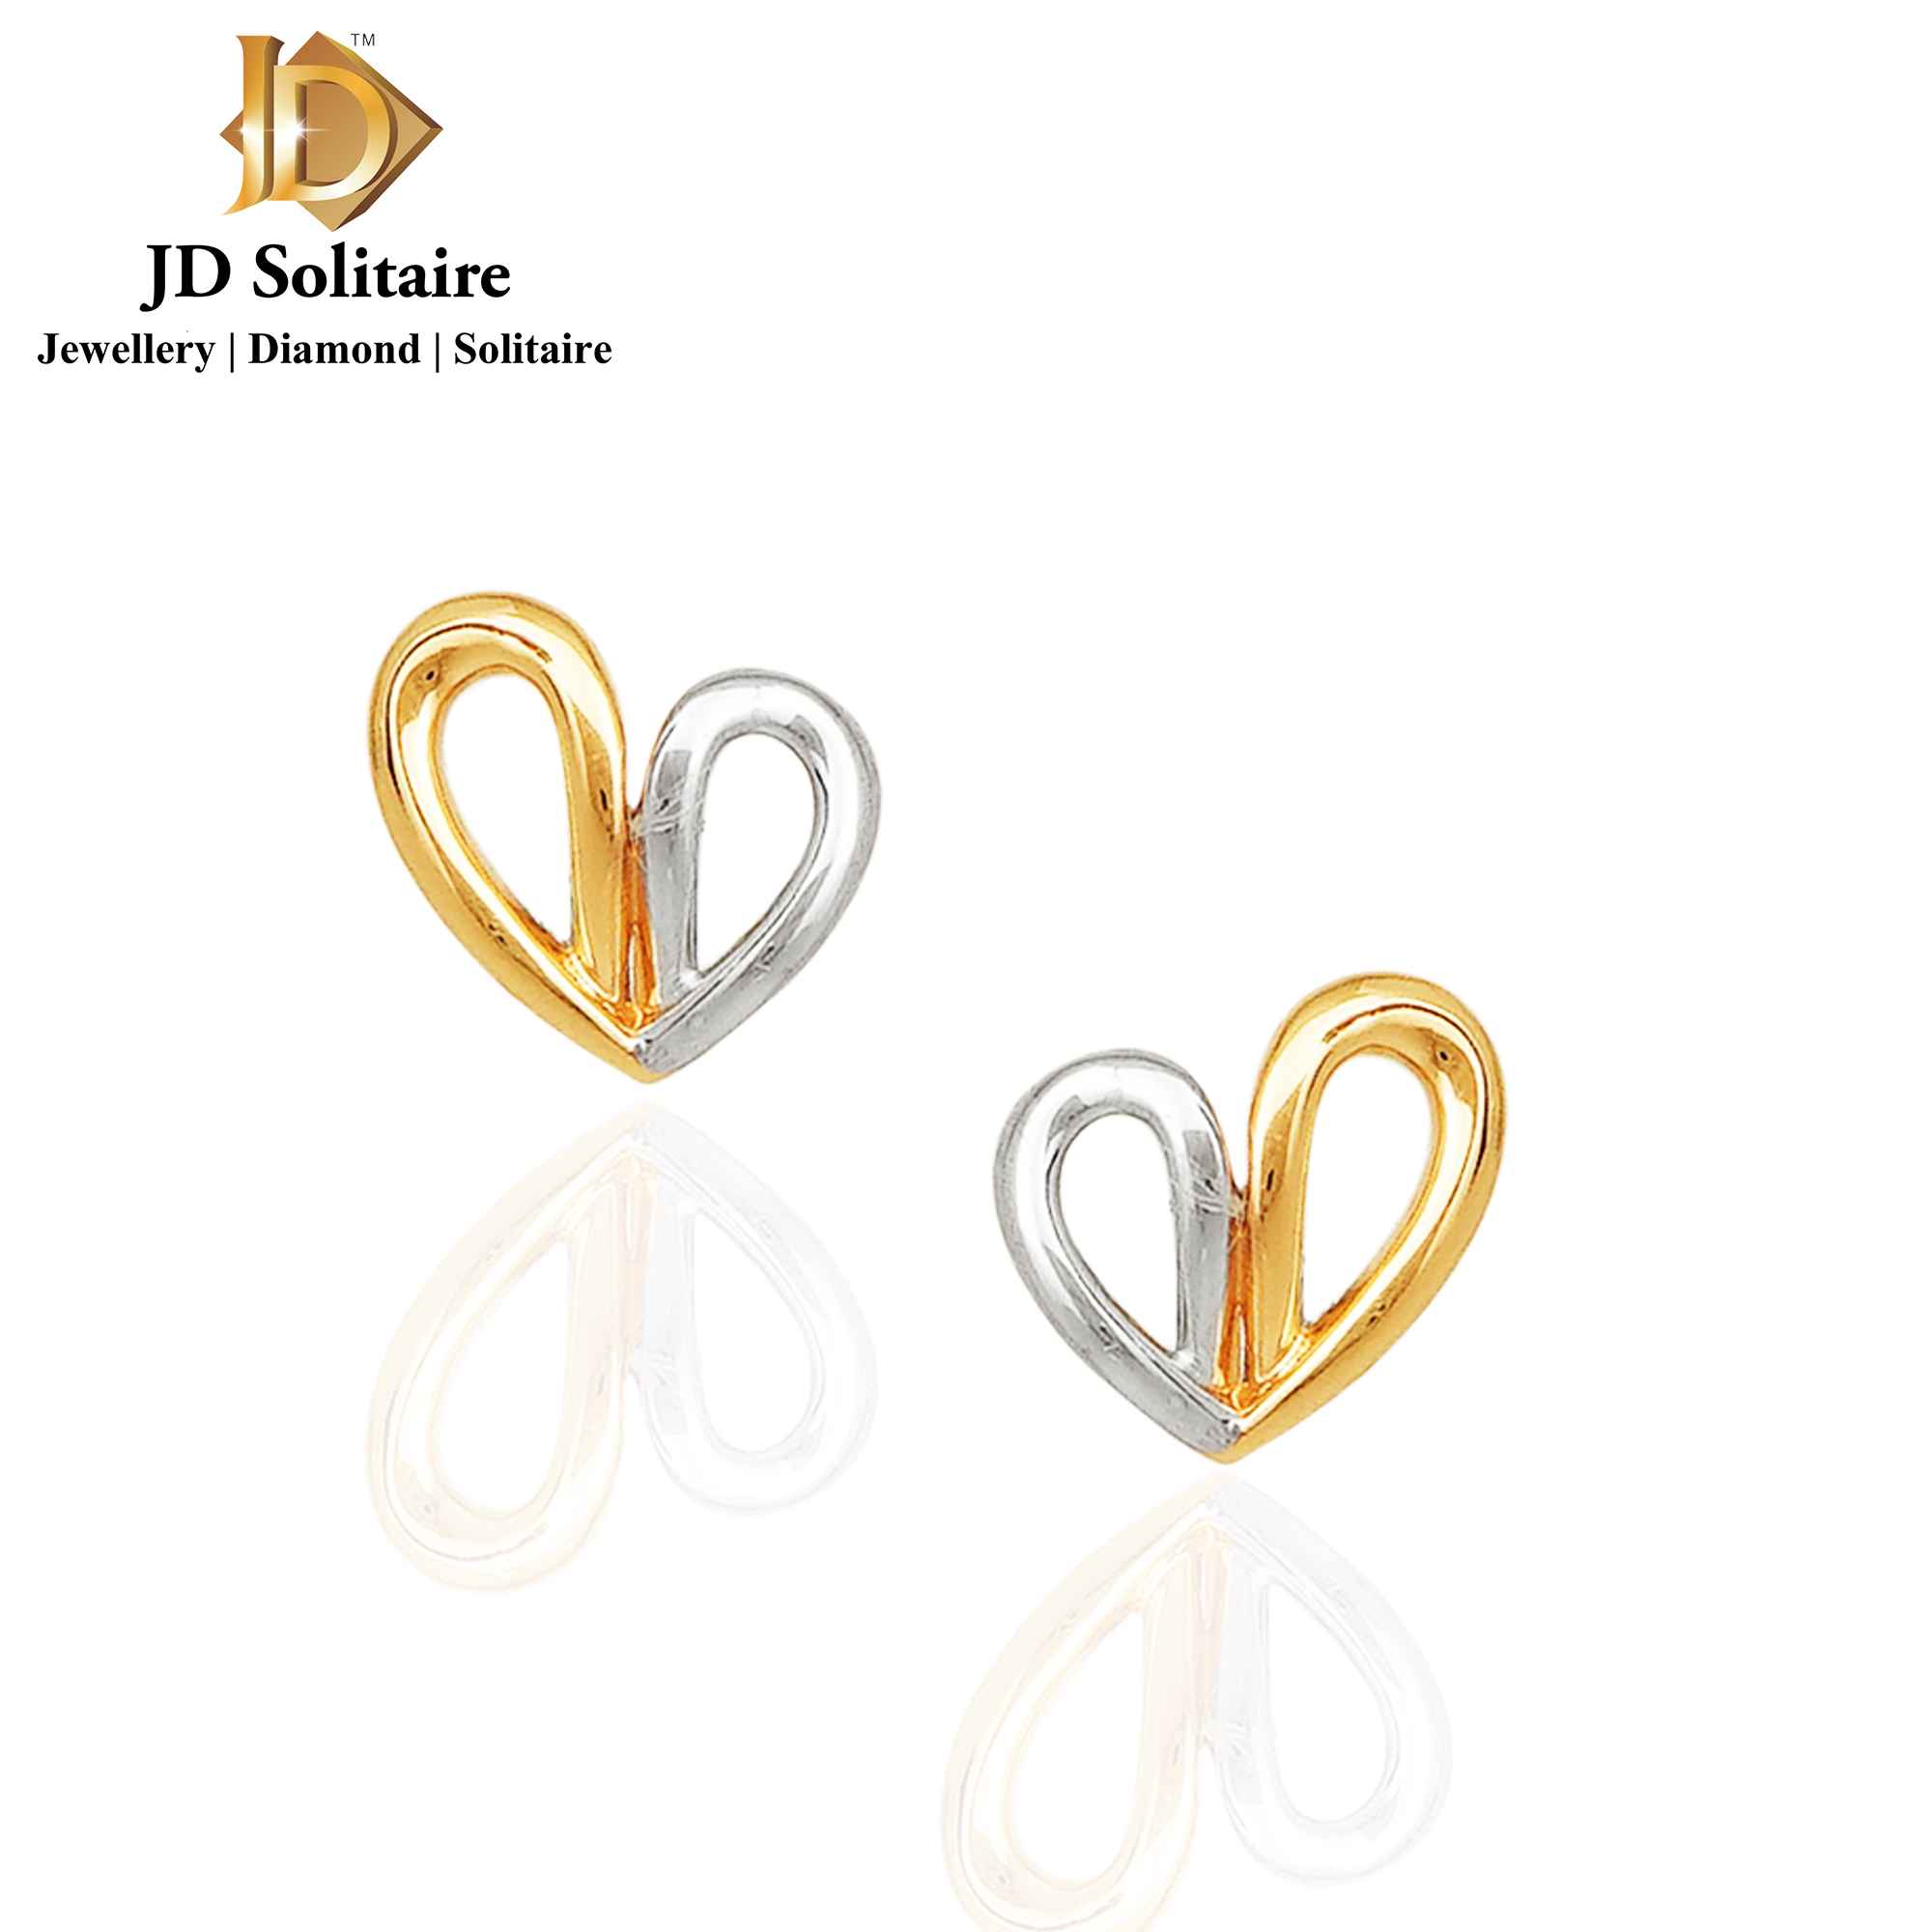 Buy Earrings for Women Gold Design Daily Use Small Earrings